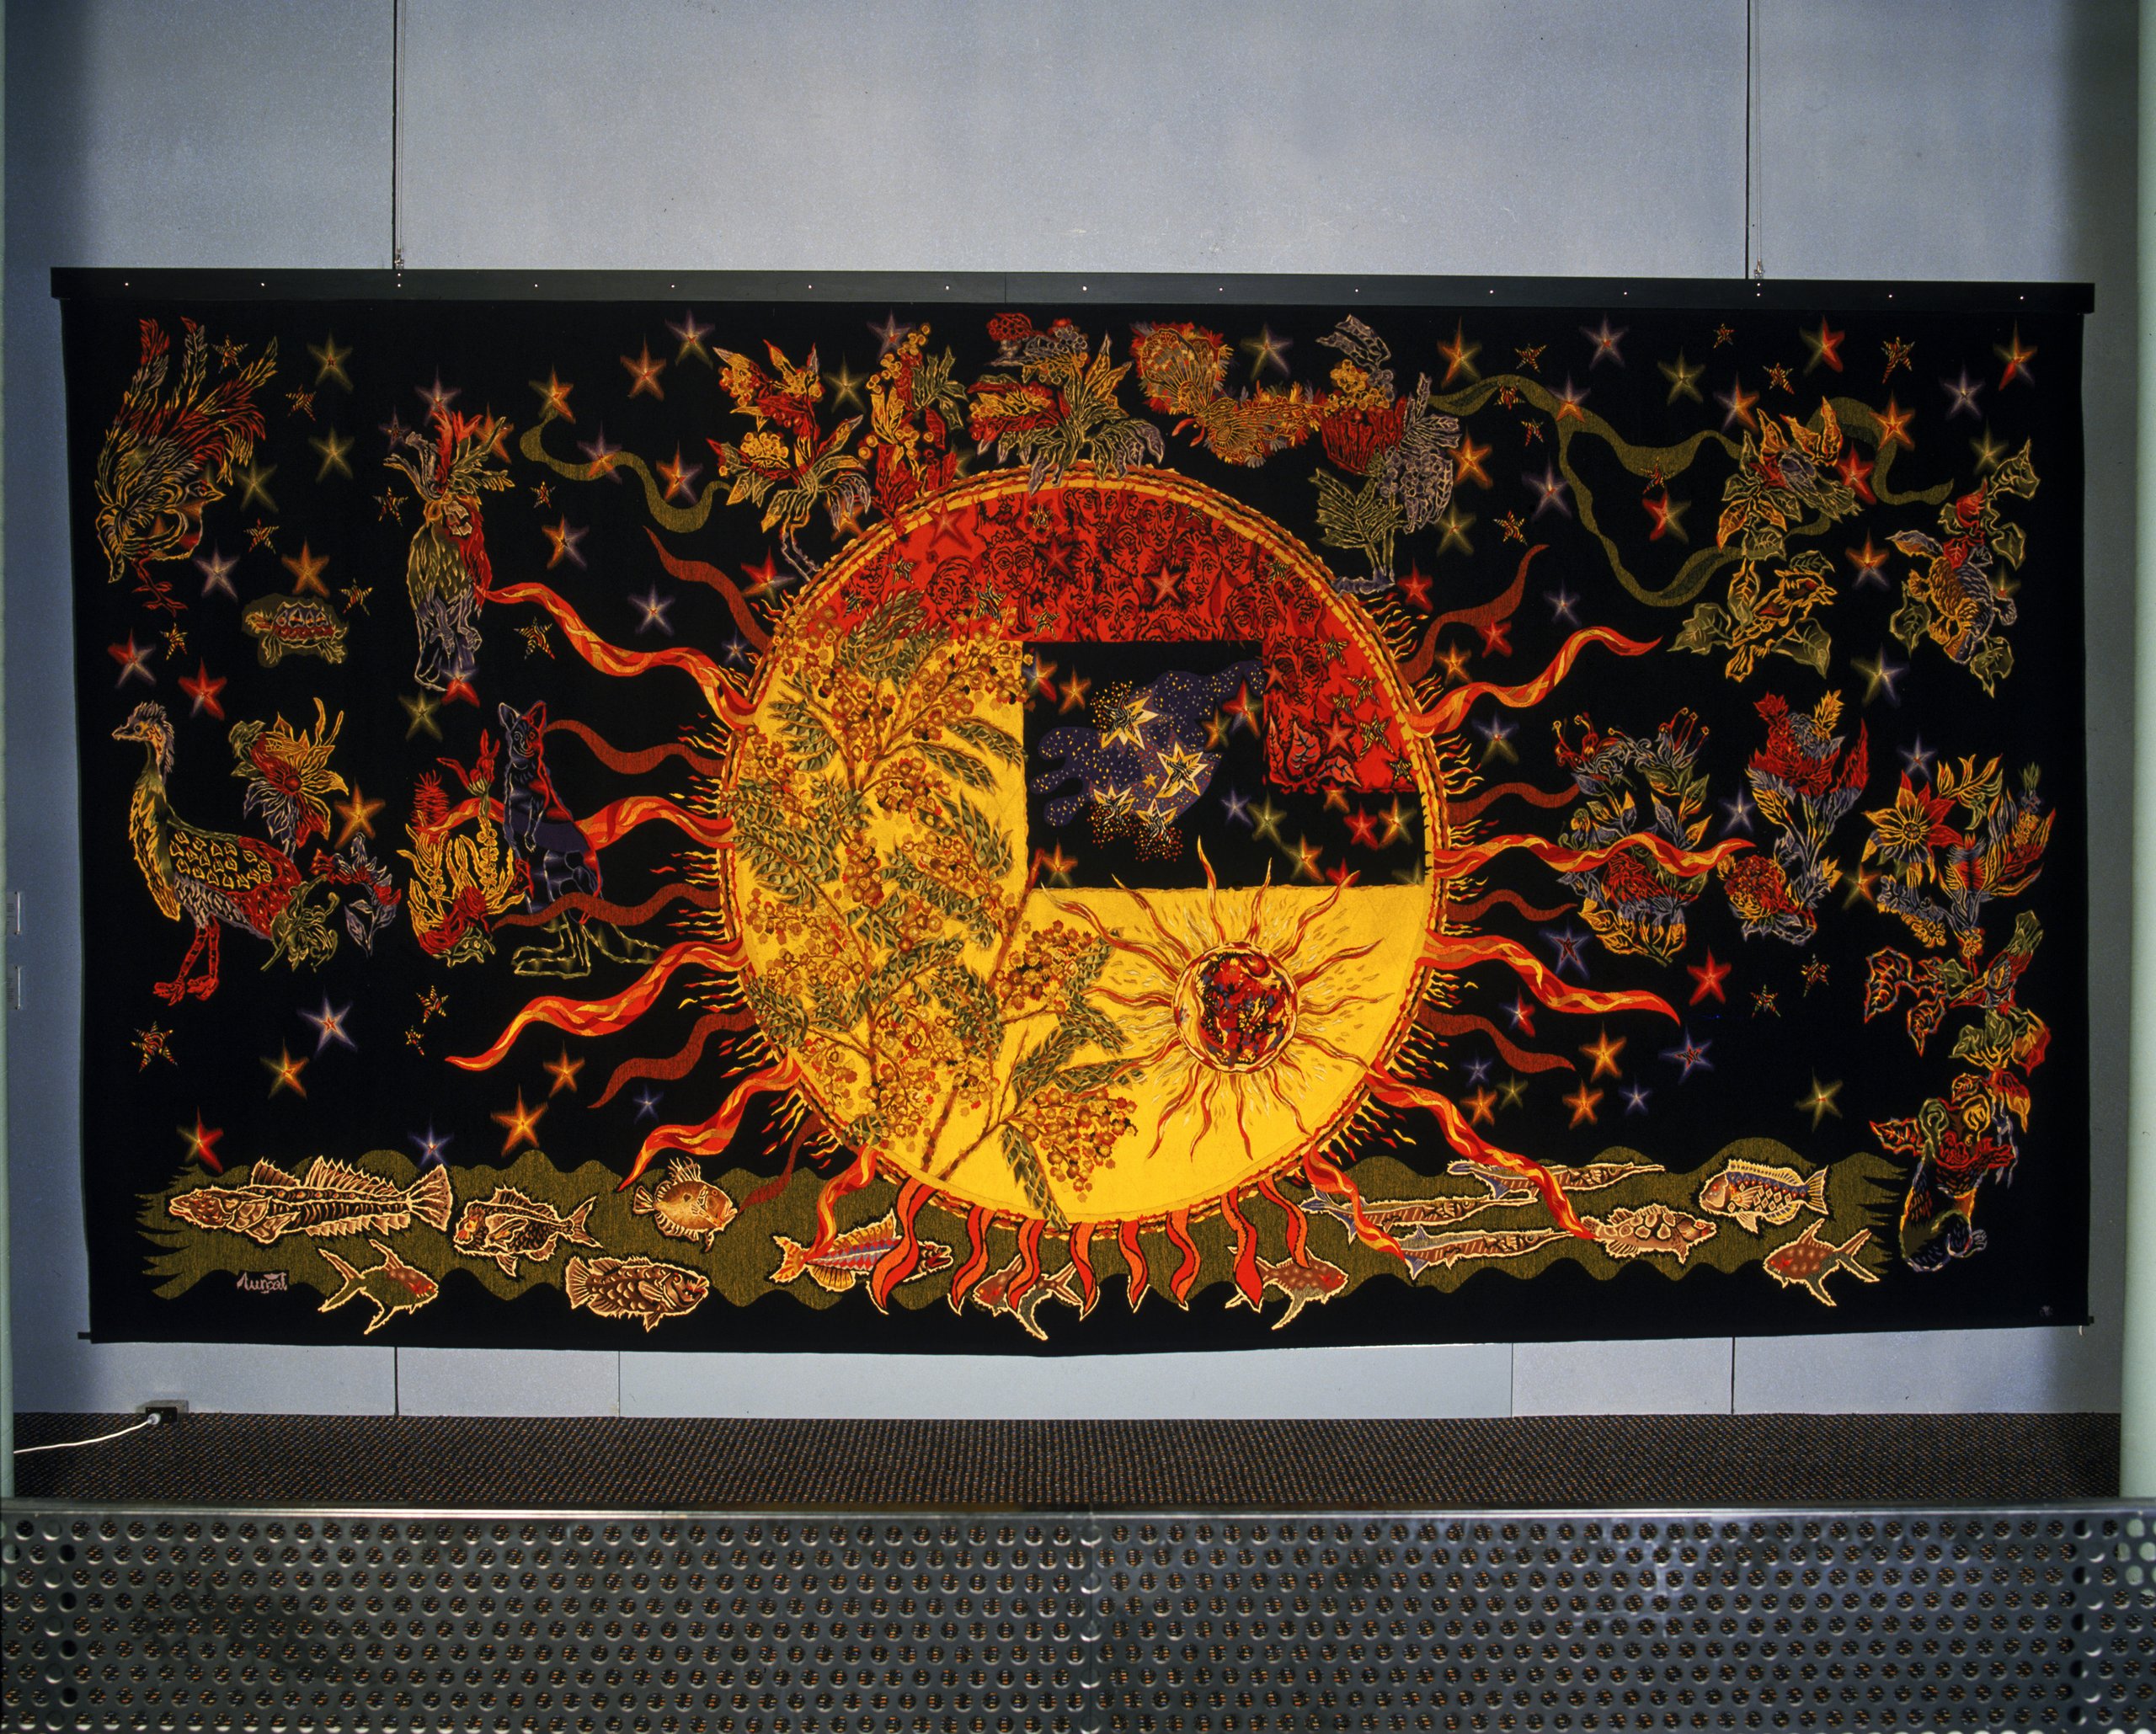 'Australia' tapestry designed by Jean Lurcat, woven in France